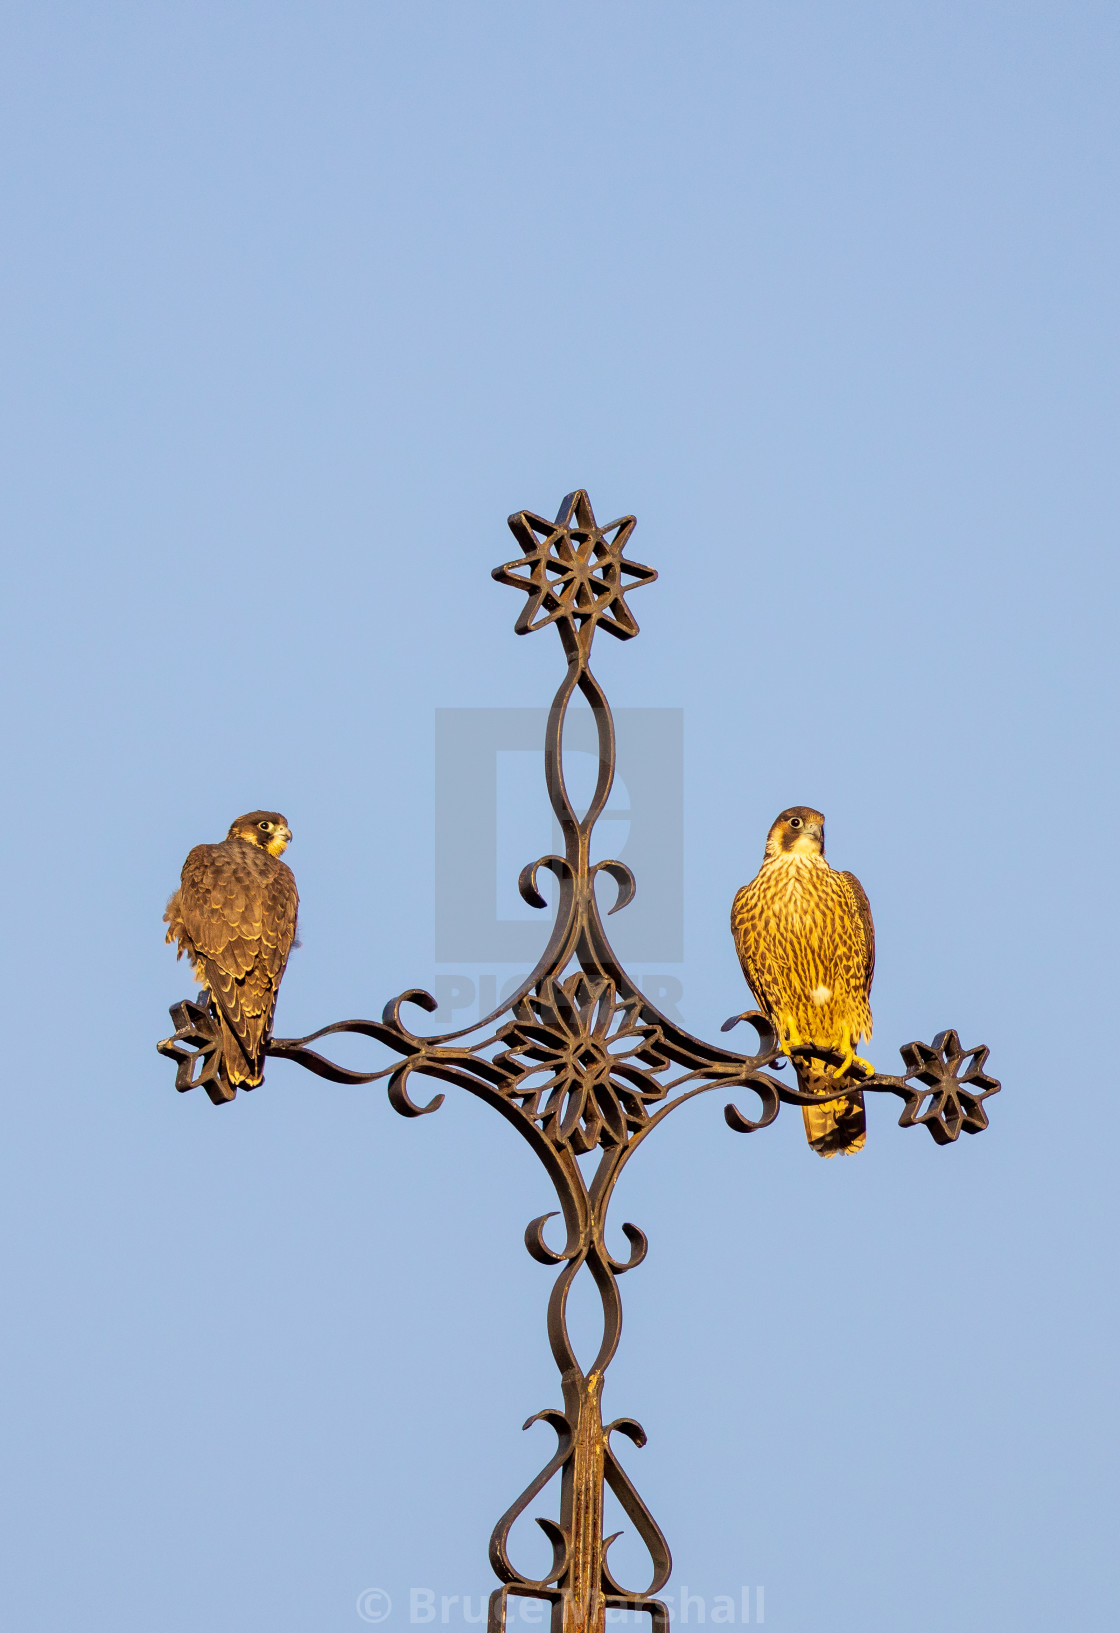 "Pair of juvenile peregrine falcons" stock image